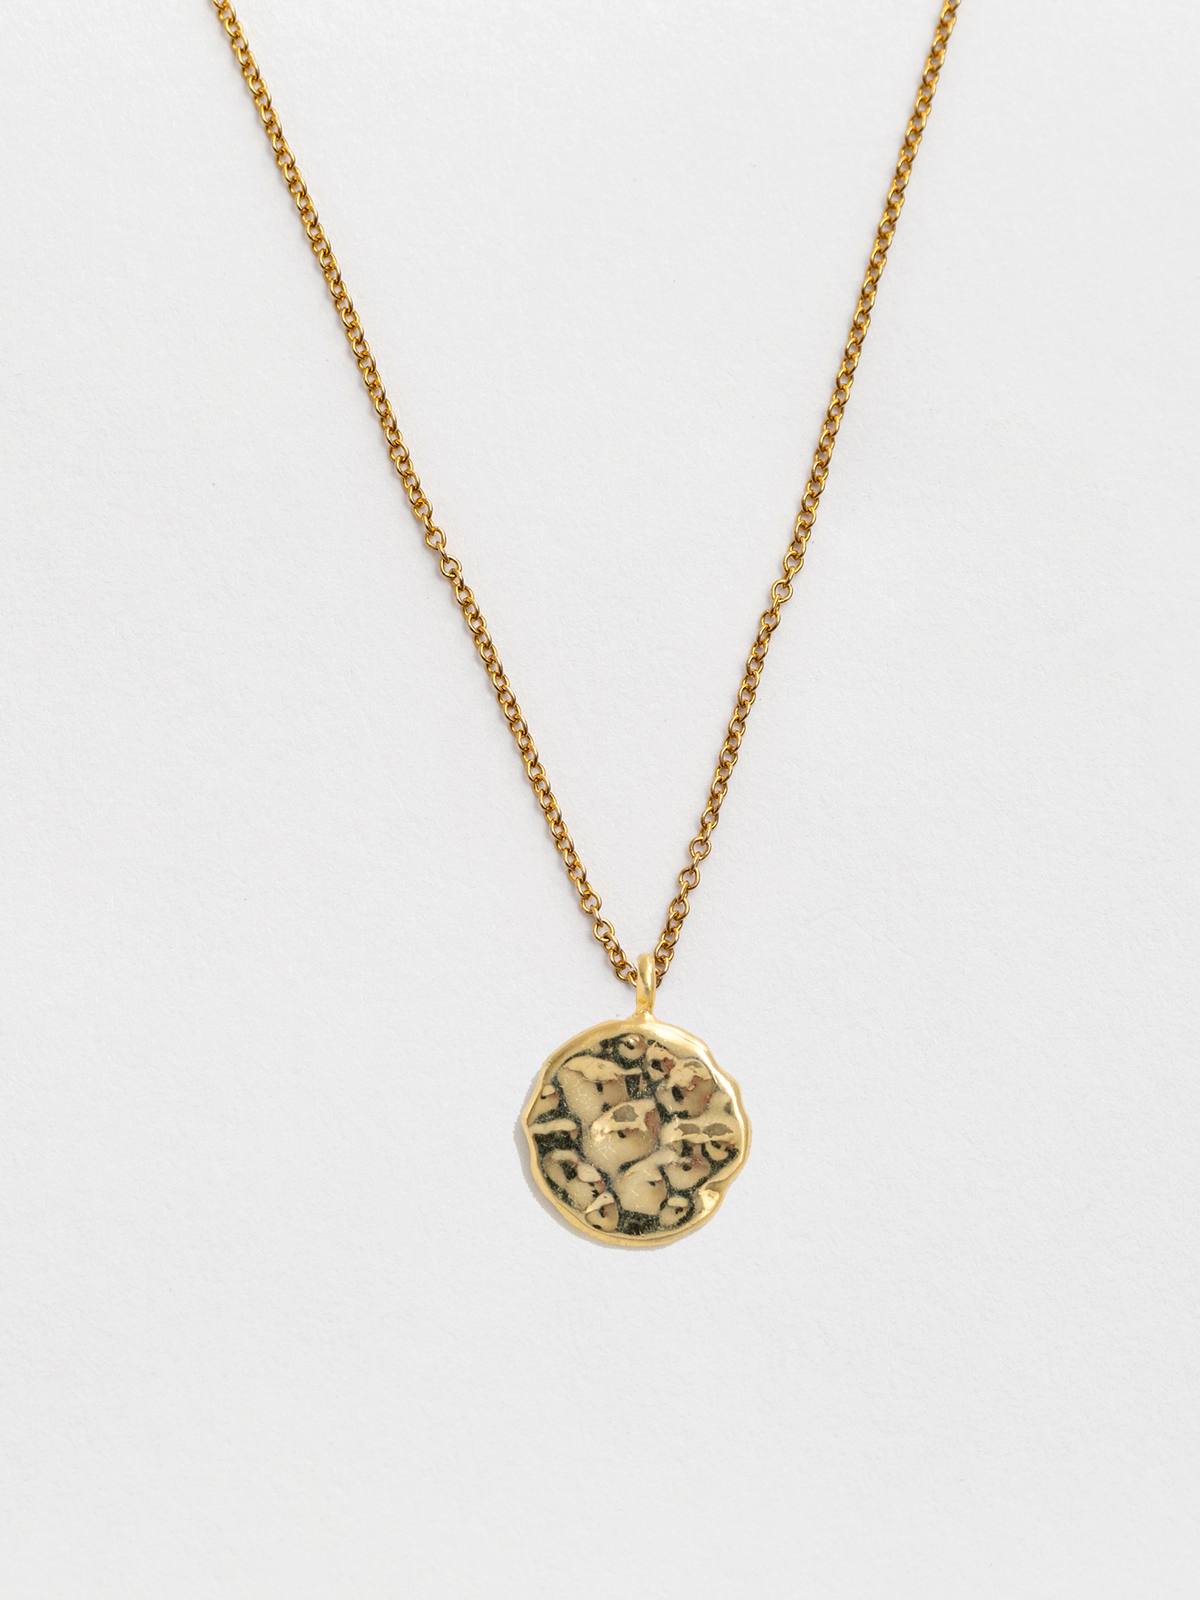 Danielle Small Gold Pendant Necklace